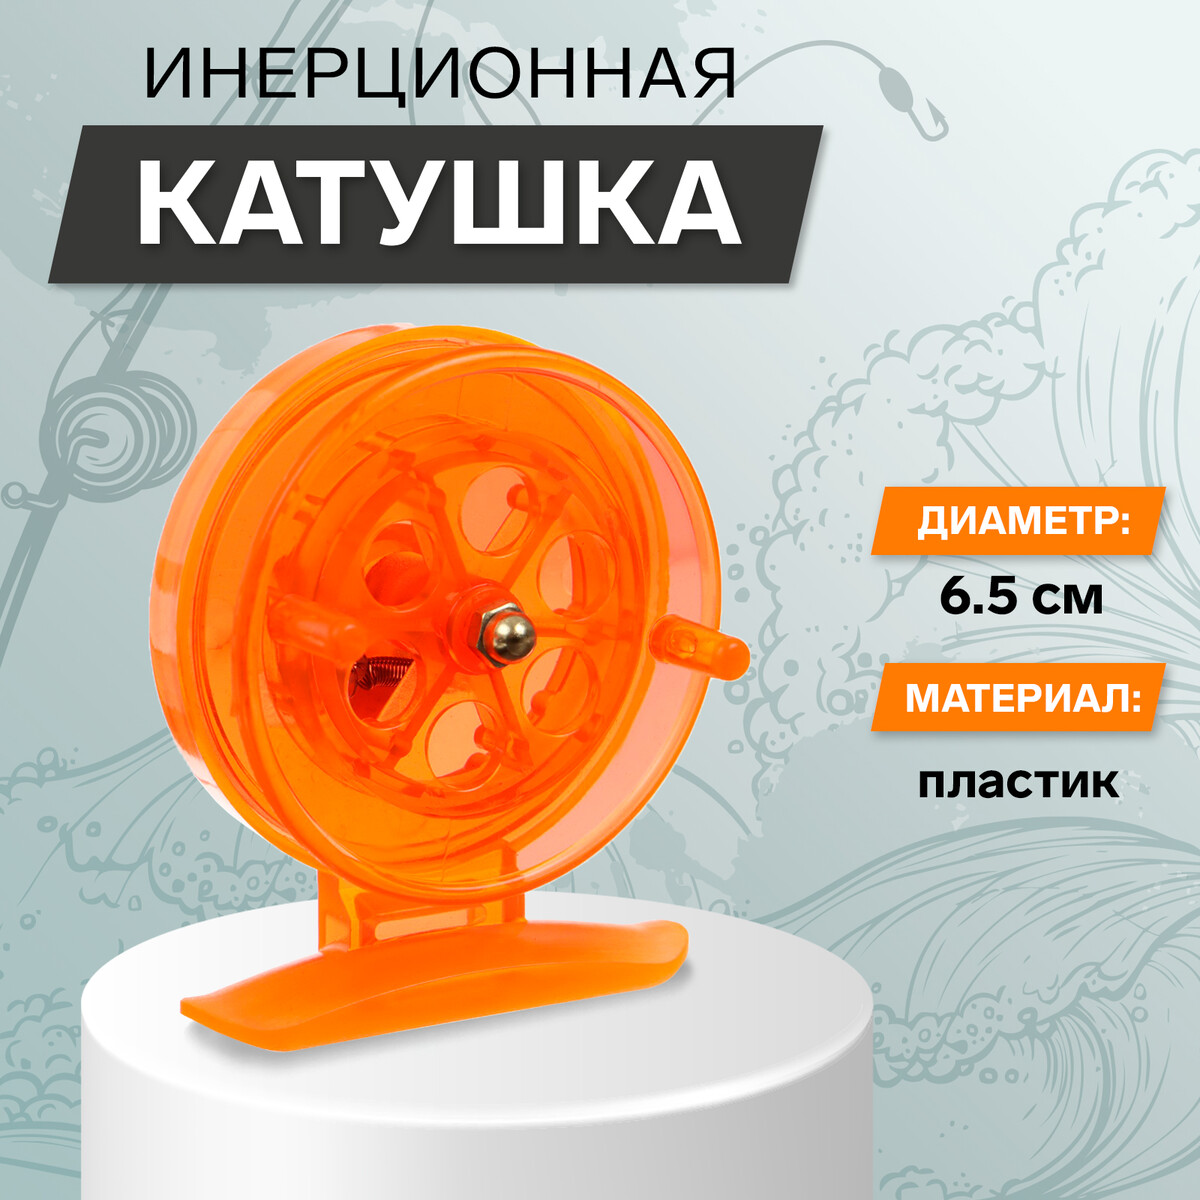 Катушка инерционная, пластик, диаметр 6.5 см, цвет оранжевый, 807s No brand